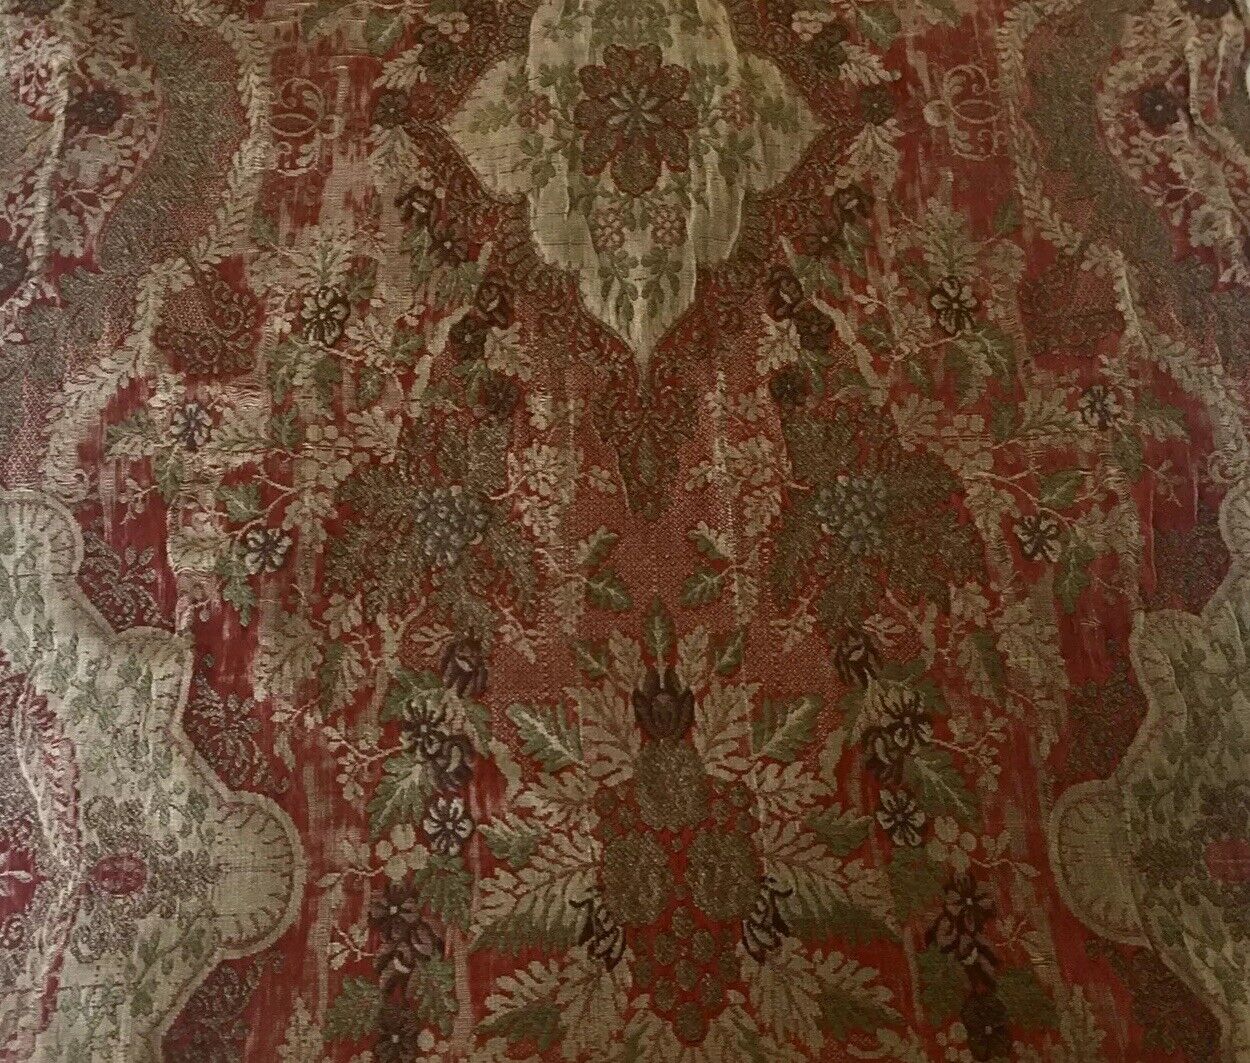 Rare Antique 17th Century Italian Silk Metallic Brocade Fabric Fragment #2~ Red